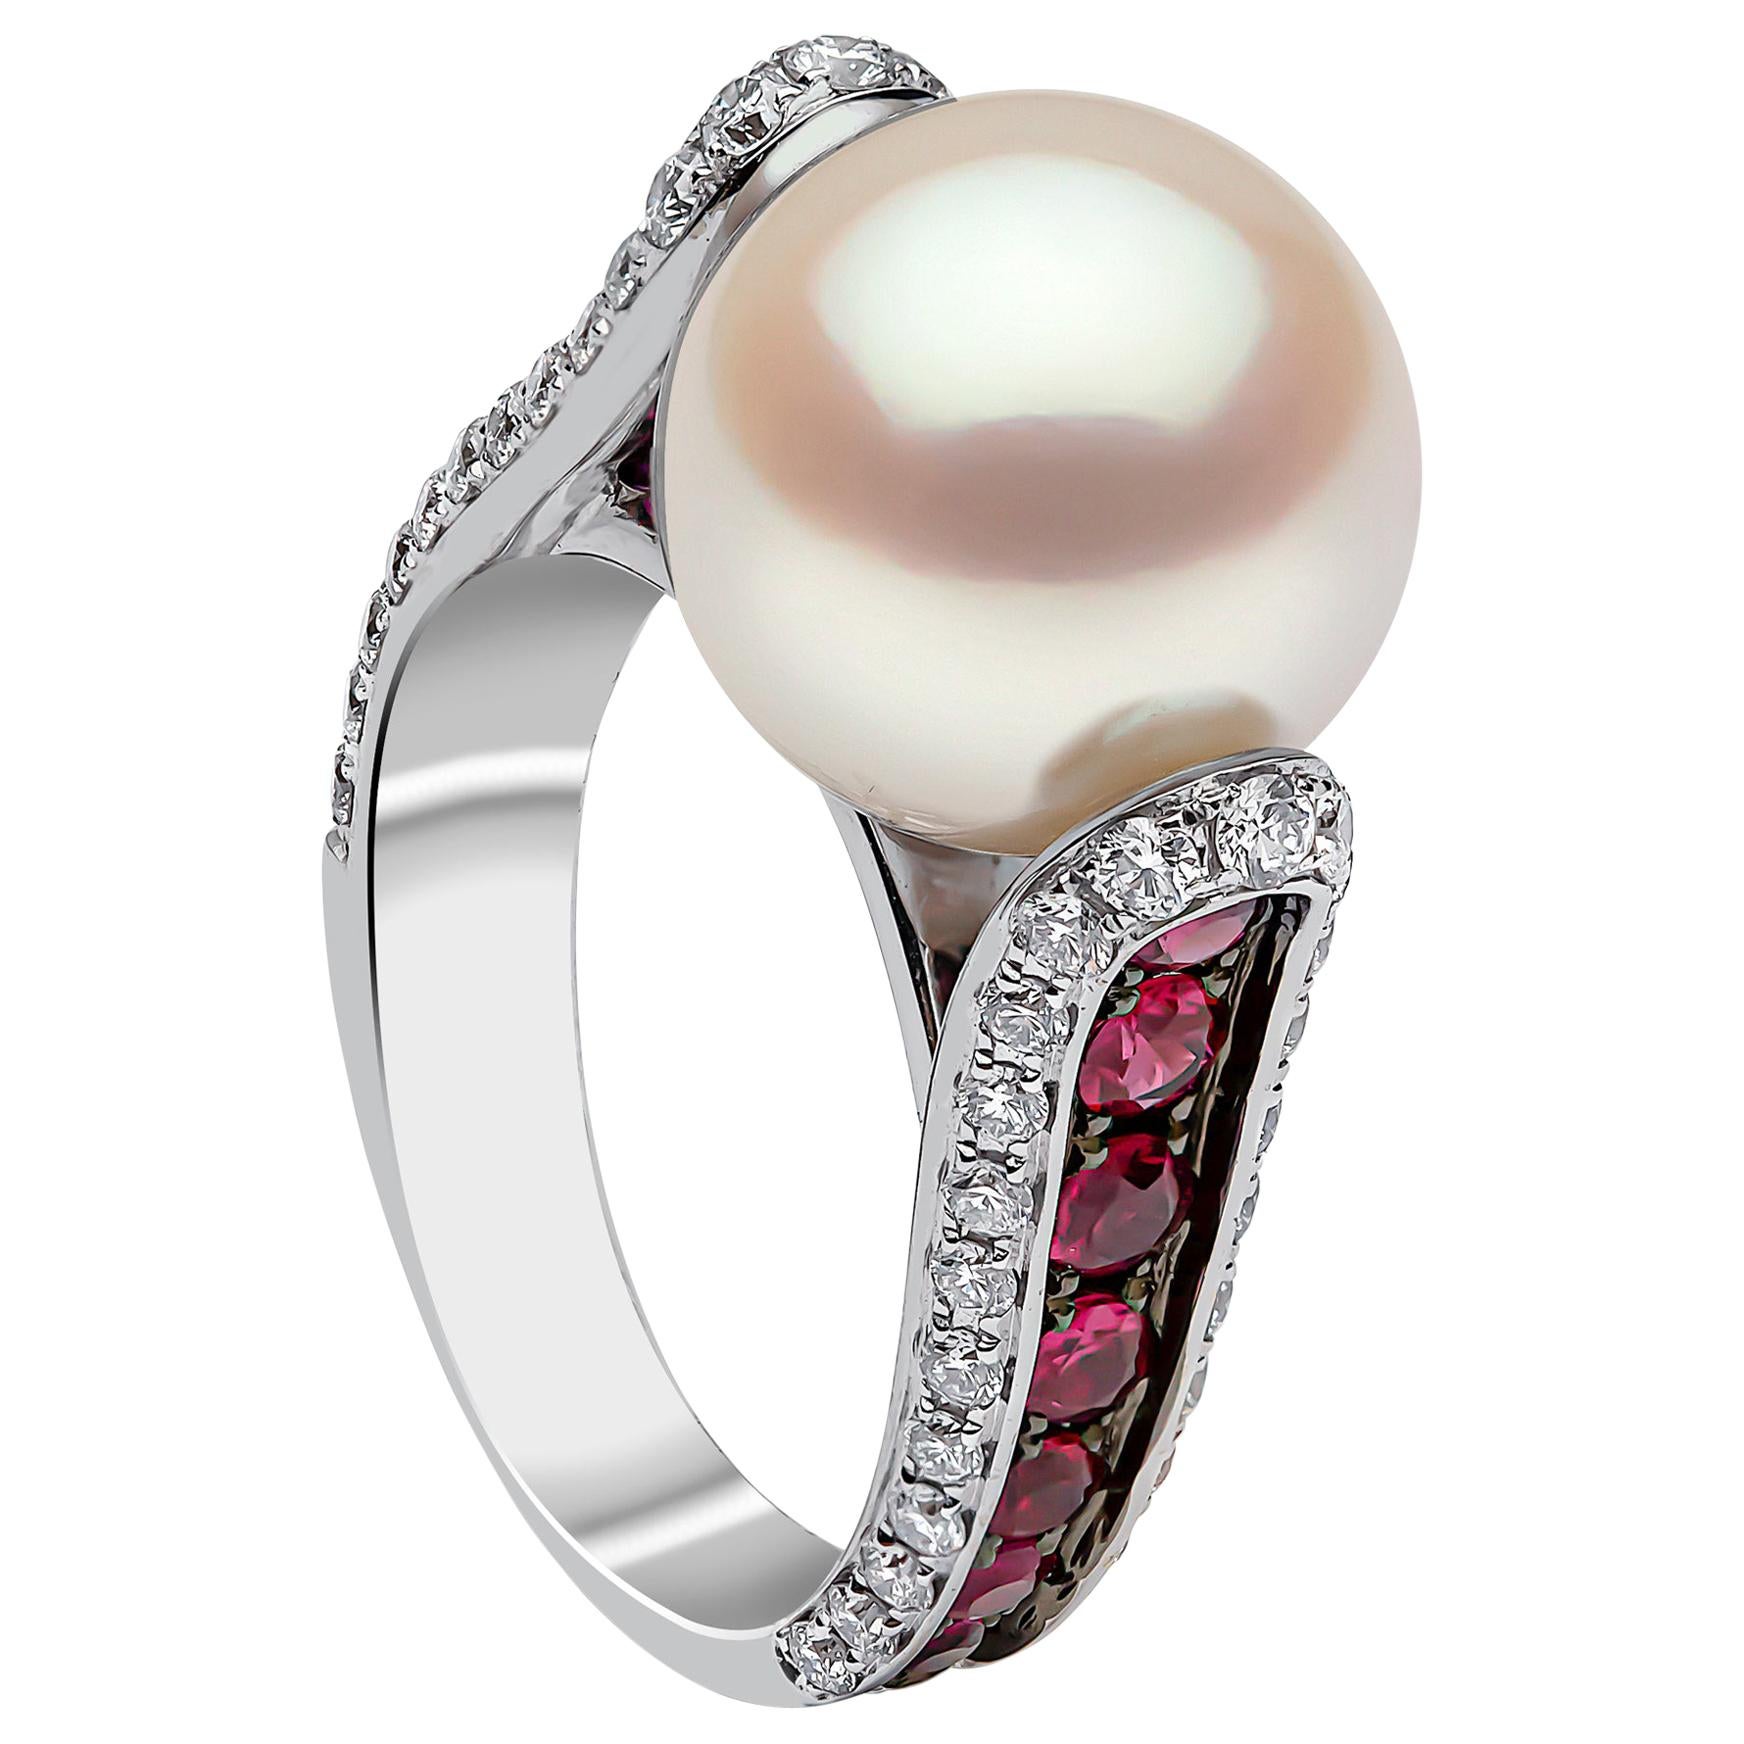 Yoko London South Sea Pearl, Ruby and Diamond Ring in 18 Karat White Gold